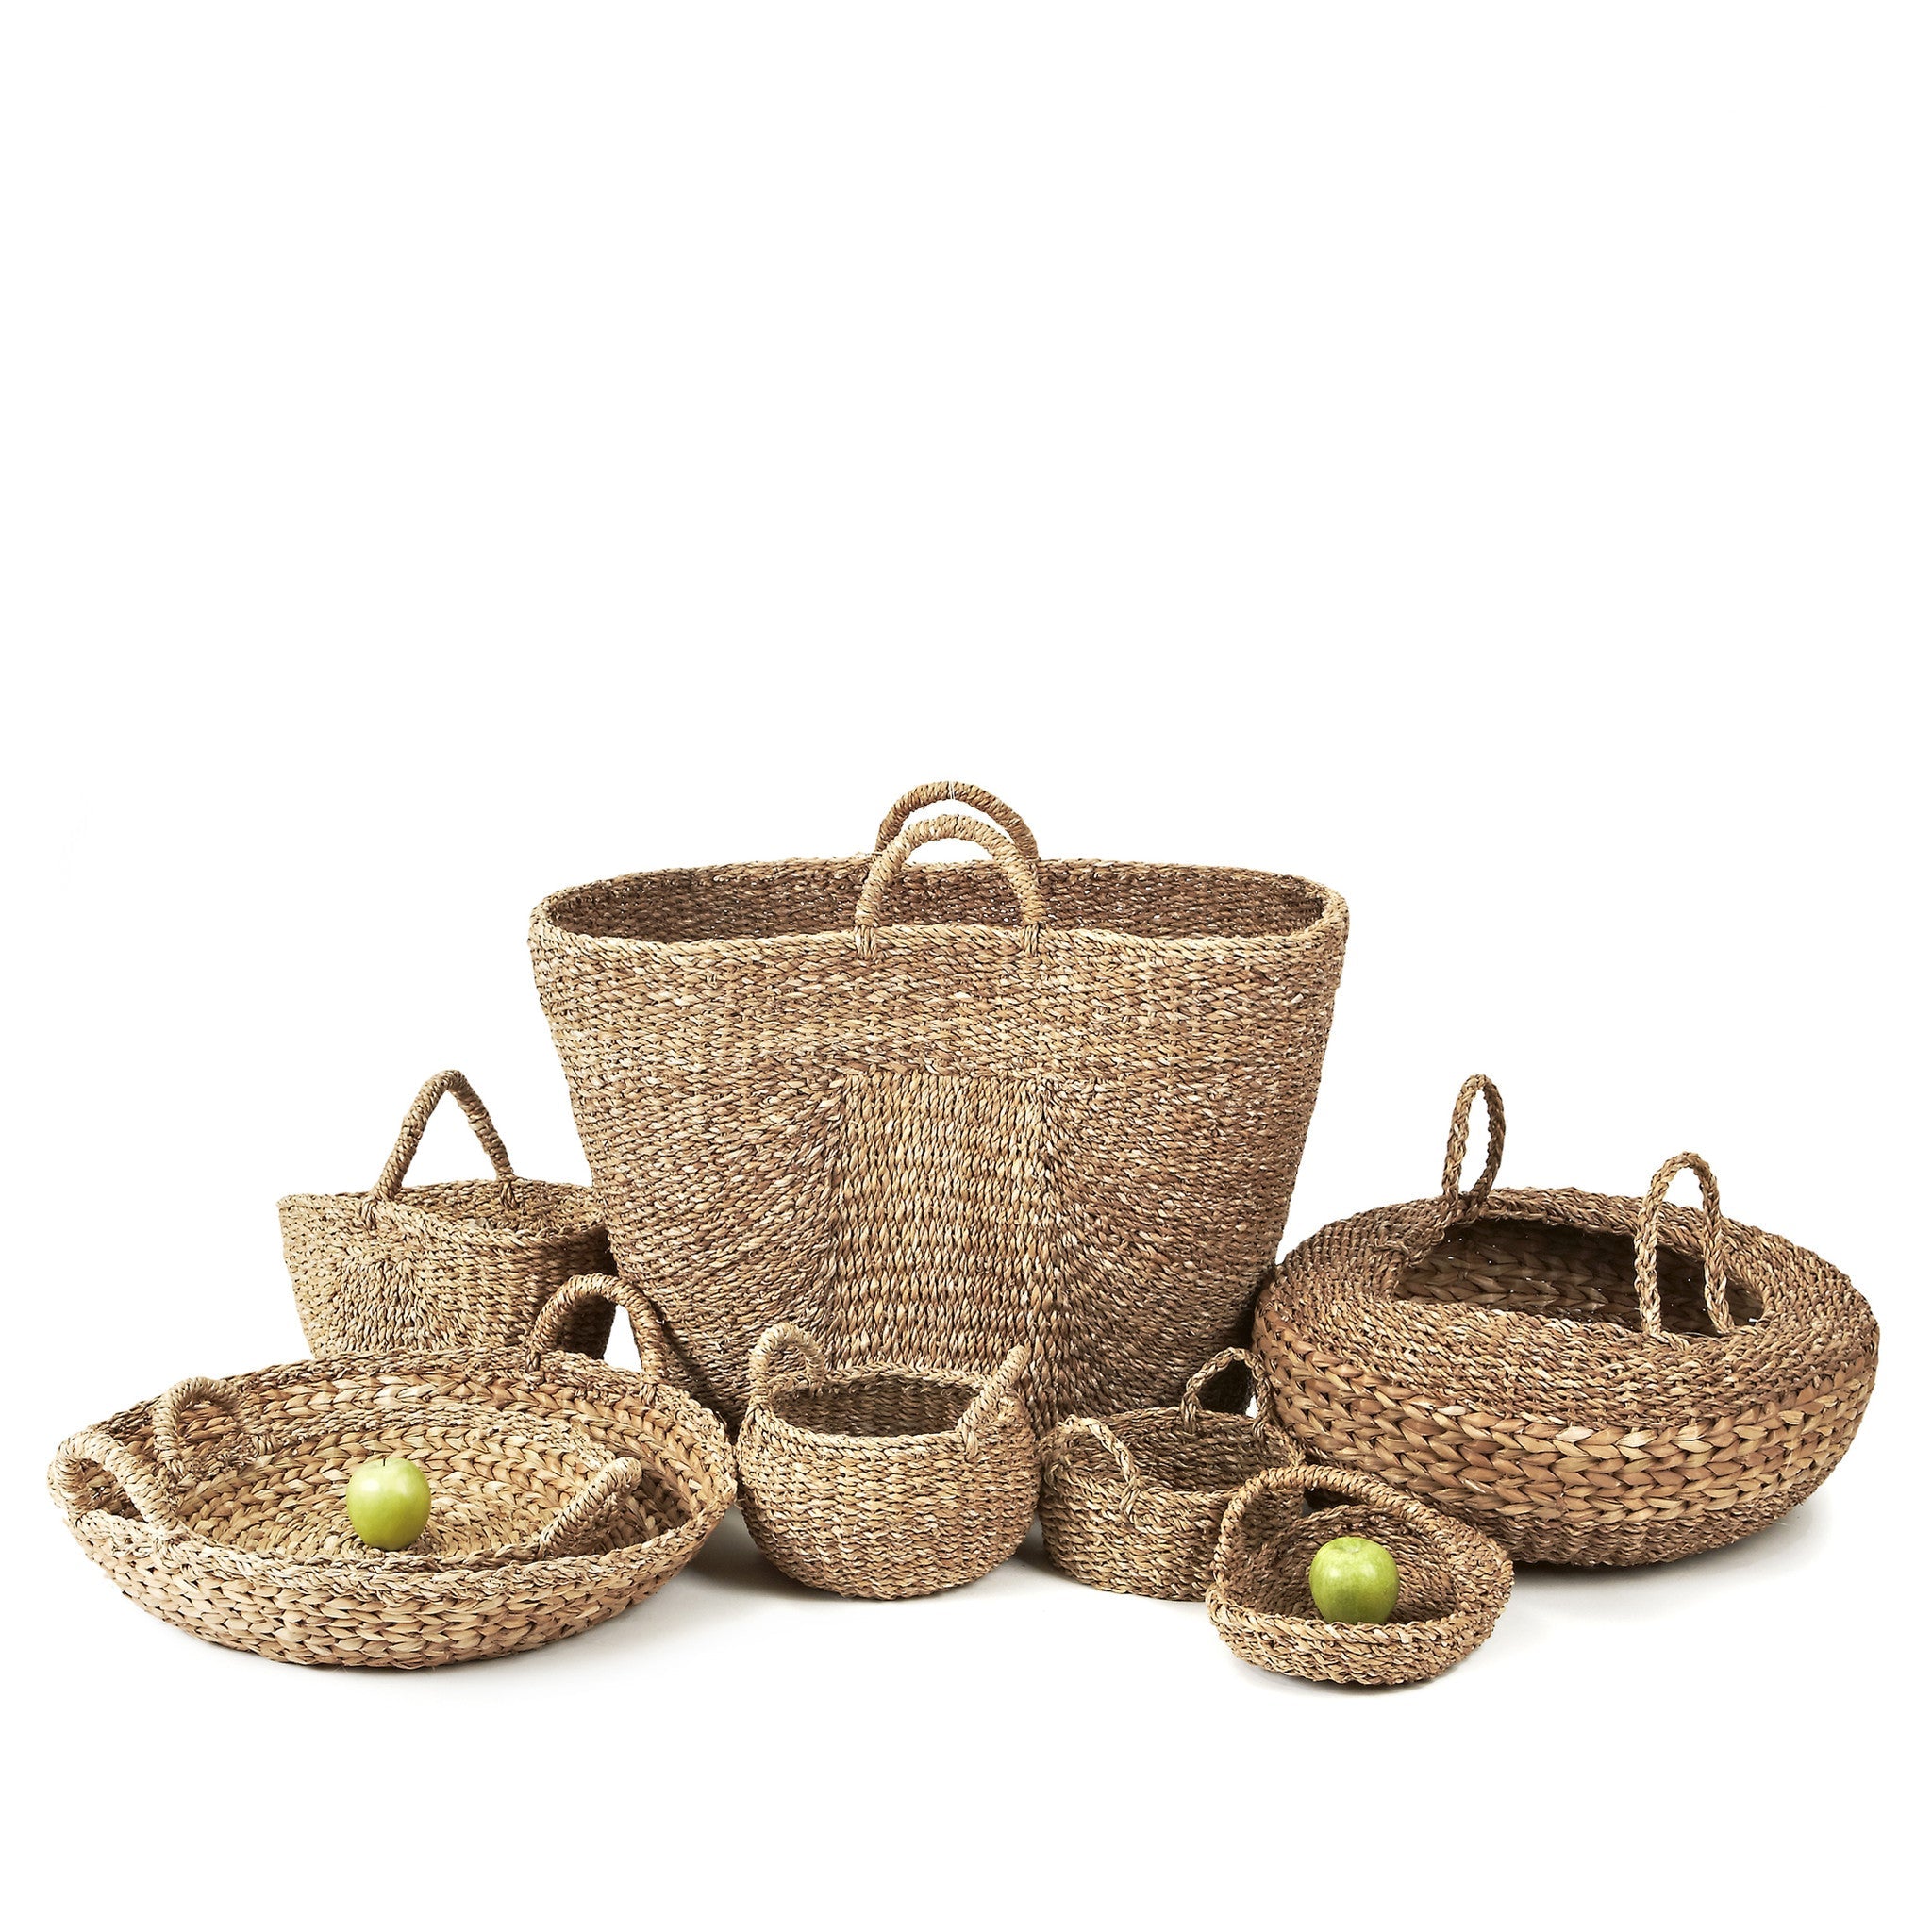 Hogla Fruit Picking Basket